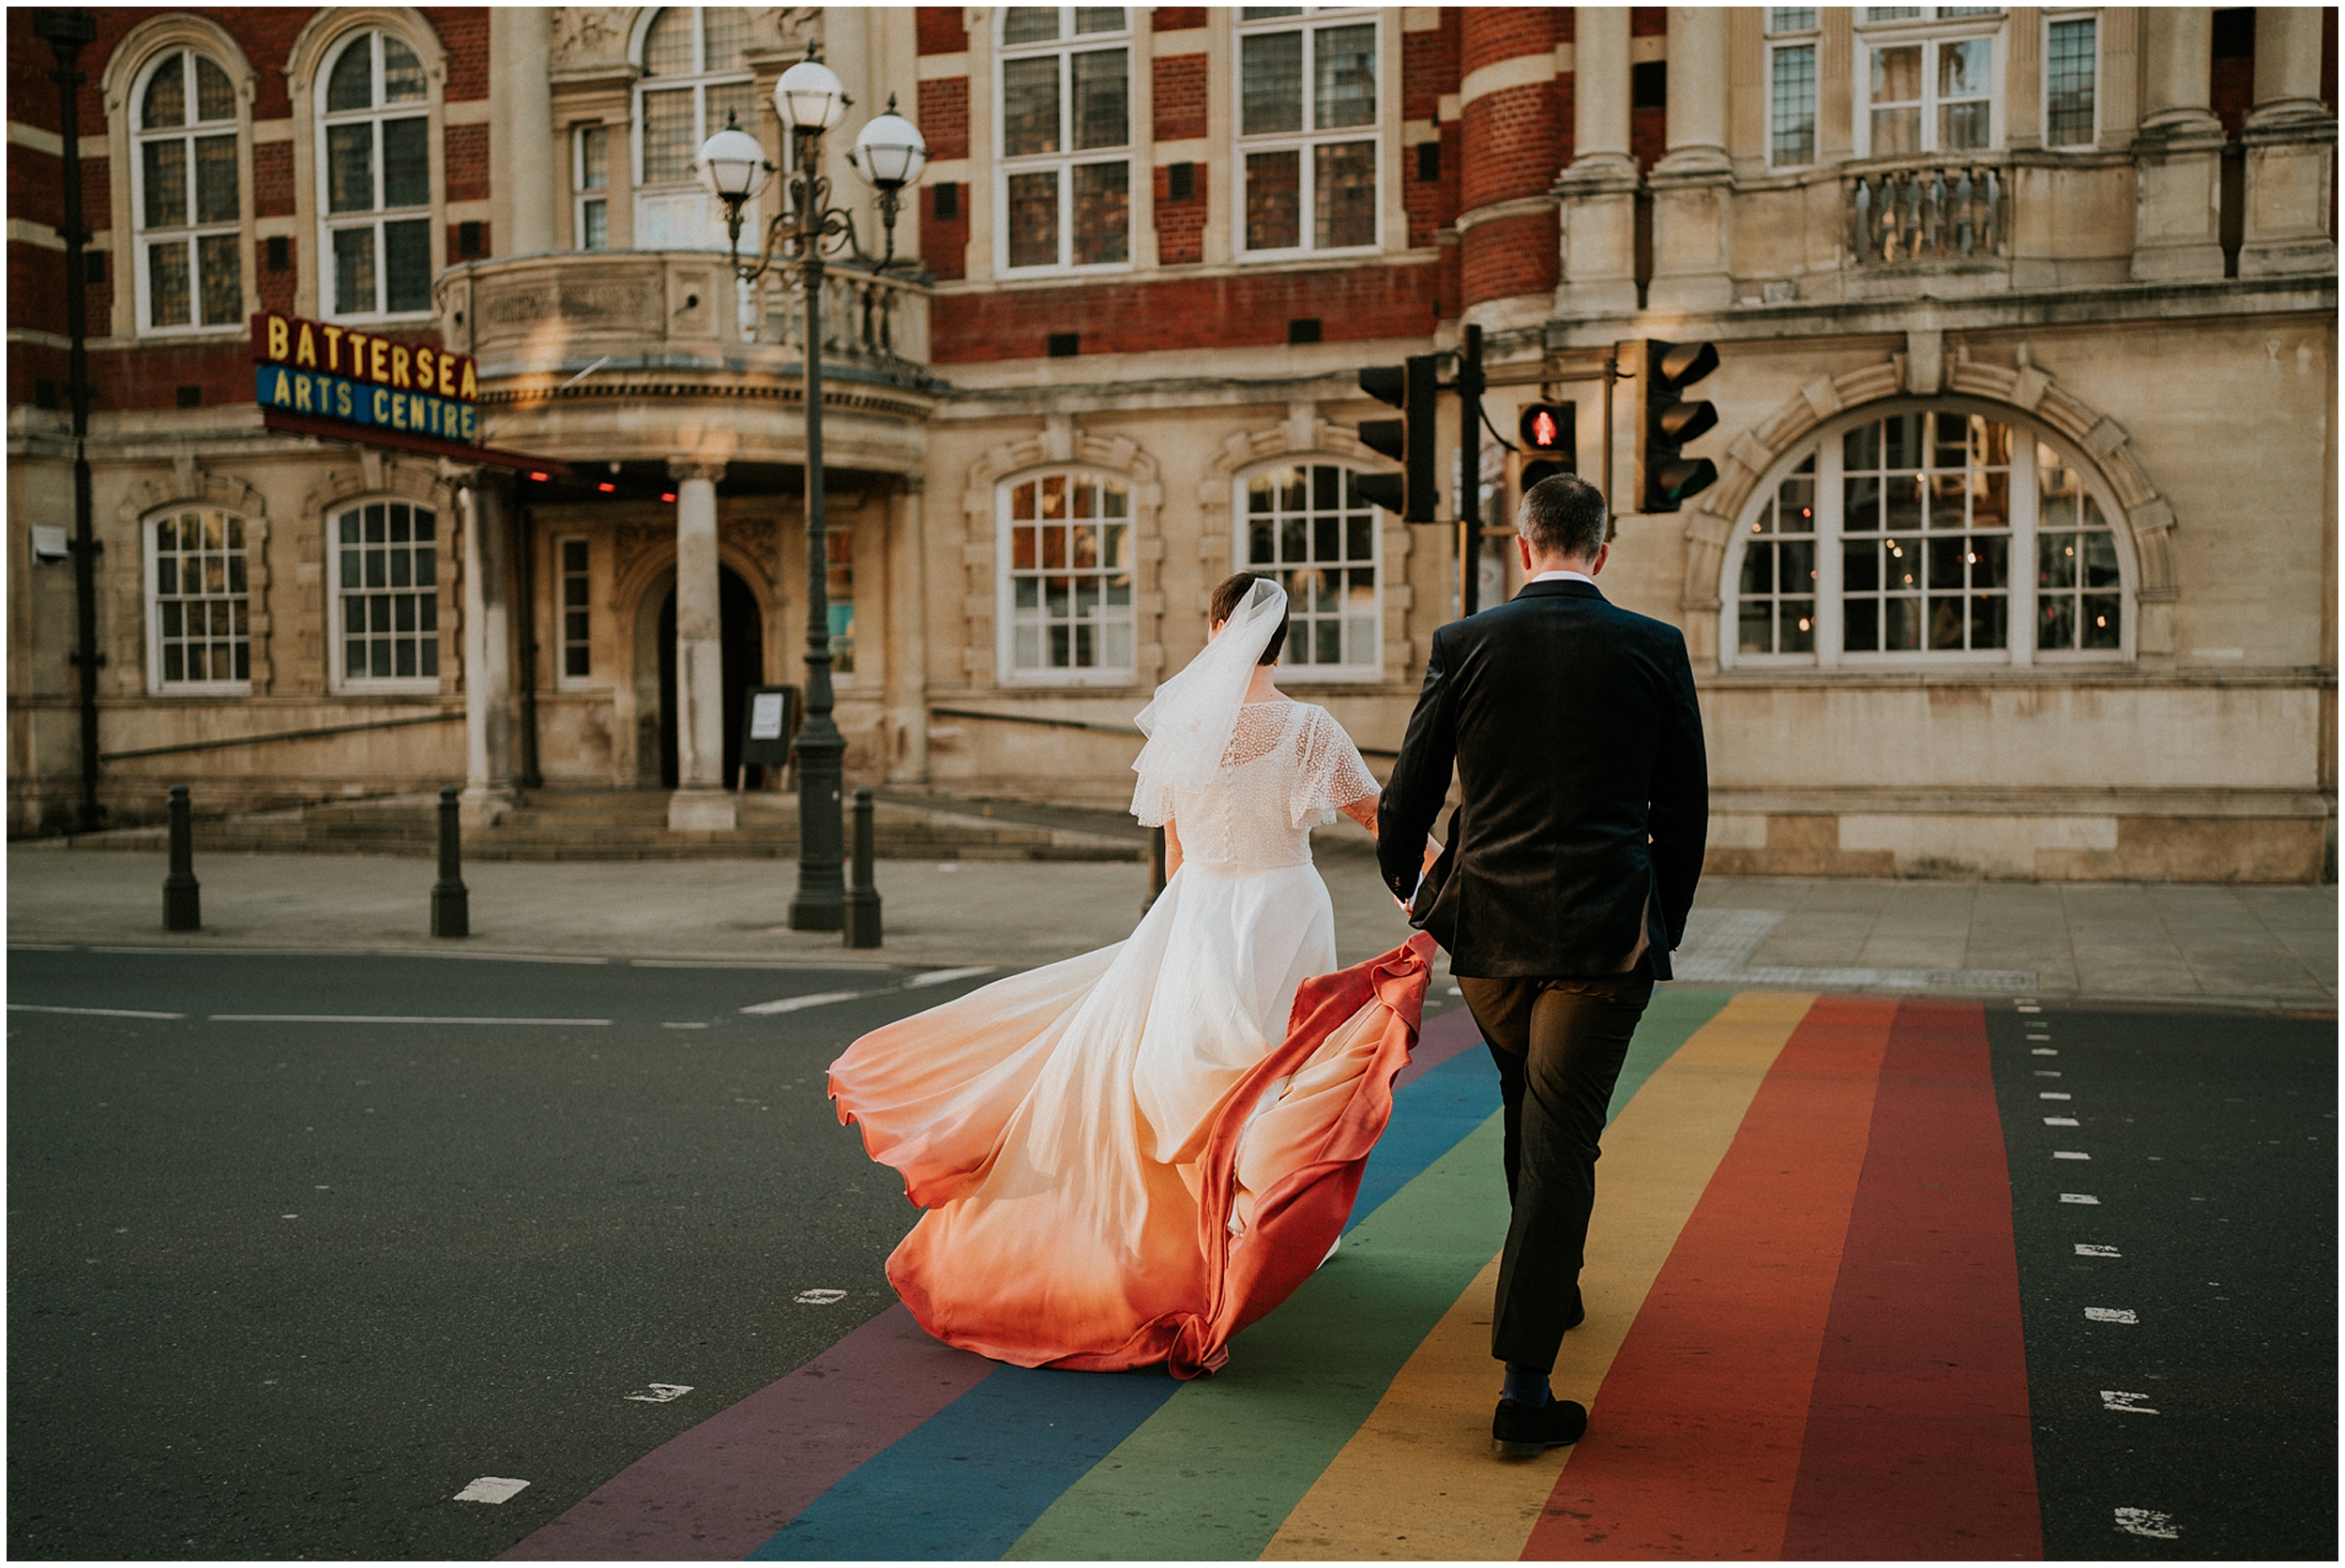 A couple walks across a rainbow road towards the Battersea Arts Centre.